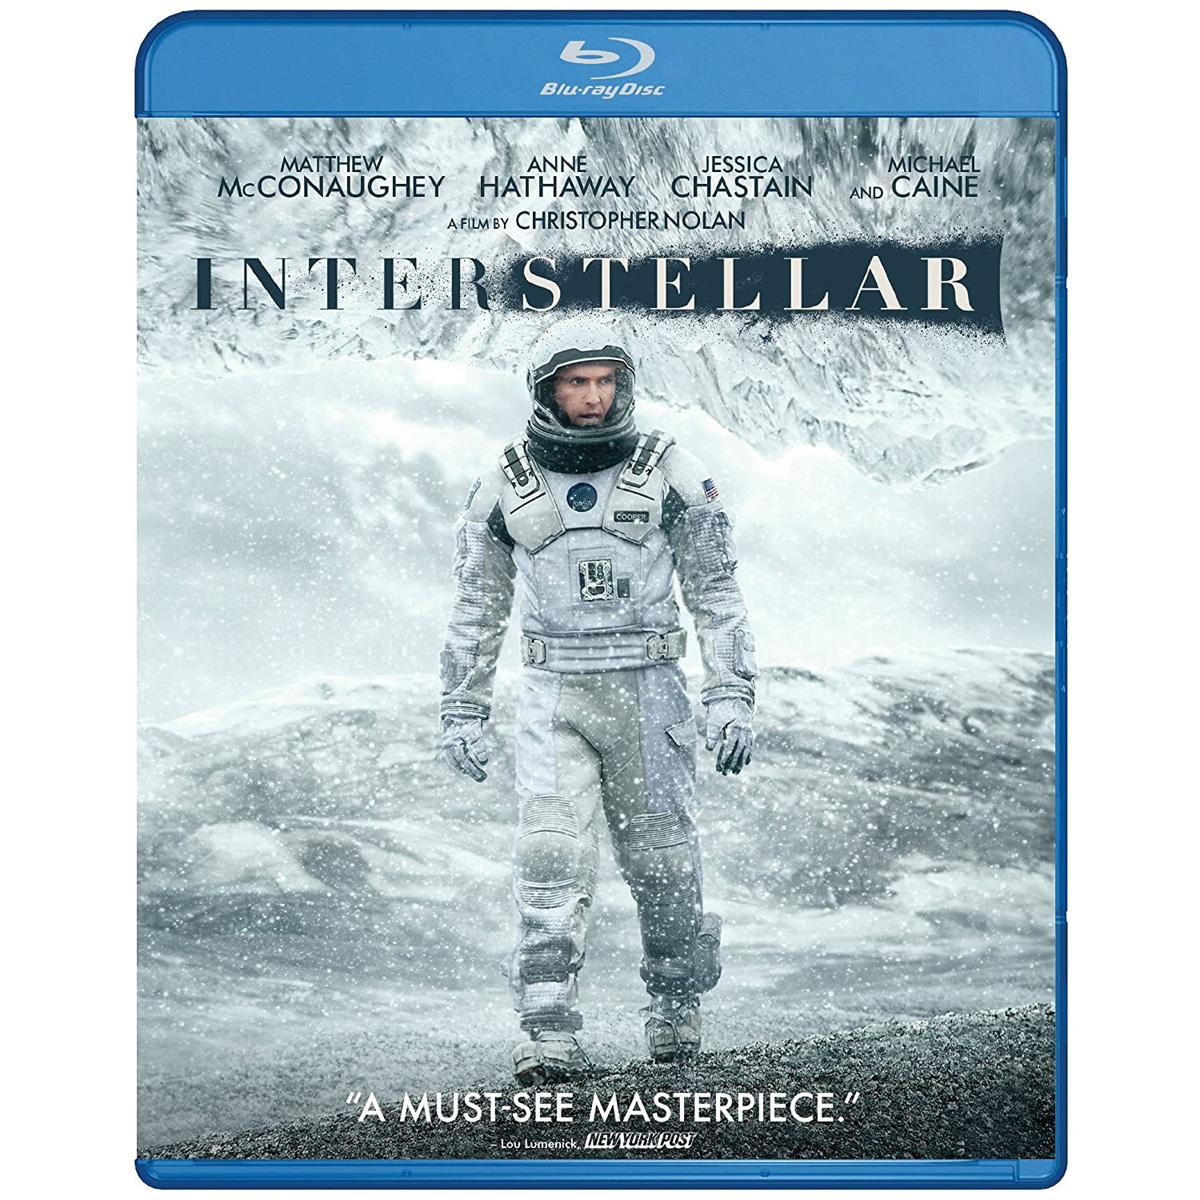 Interstellar Blu-ray for $5.99